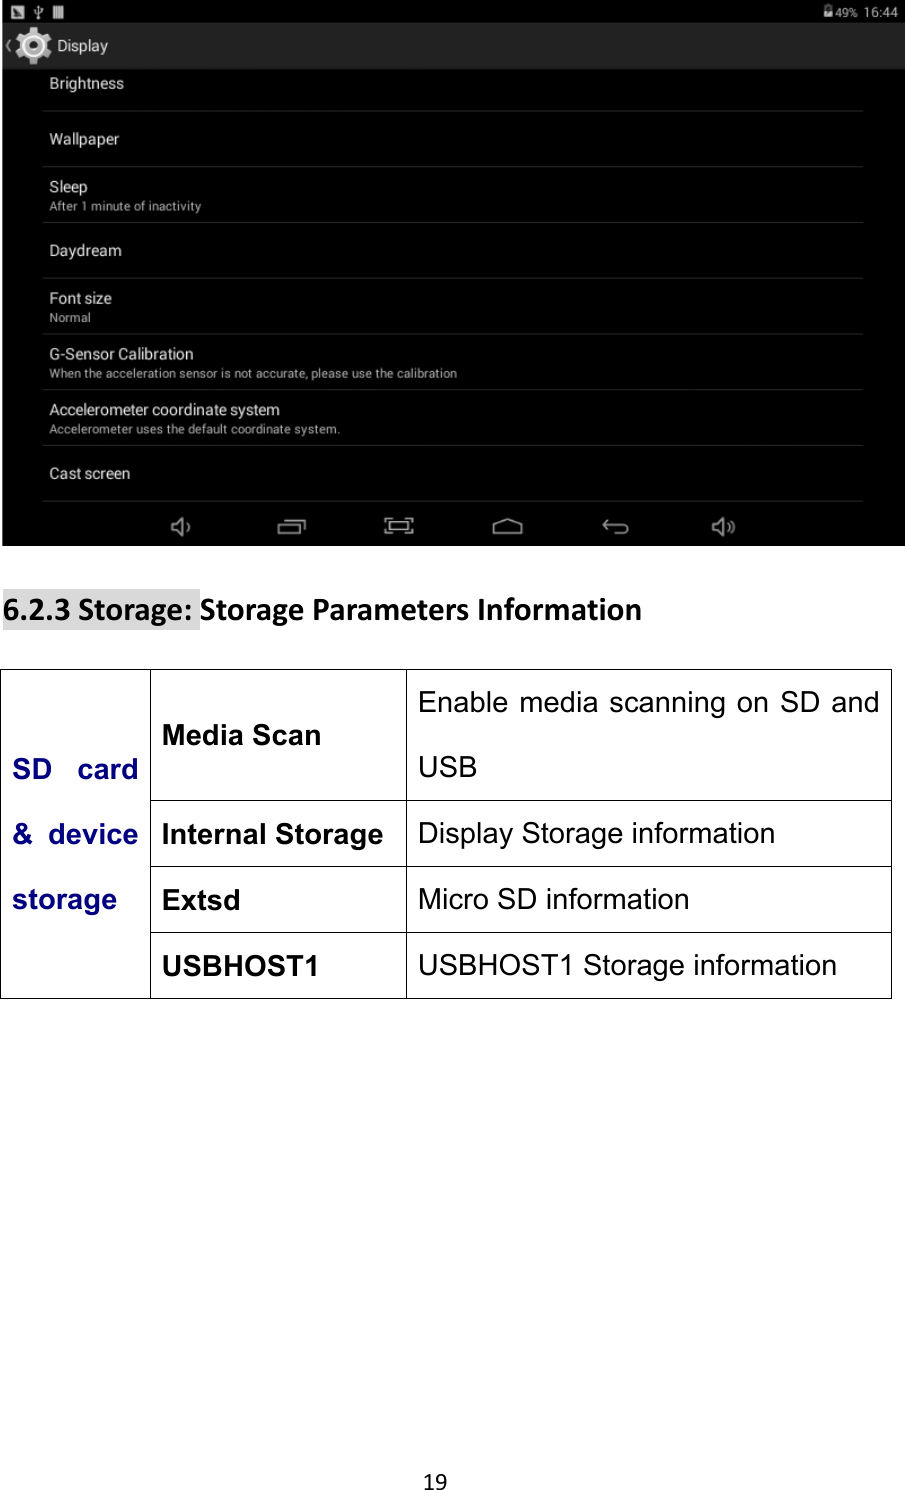 19  6.2.3Storage:StorageParametersInformationSD card &amp; device storage Media Scan Enable media scanning on SD and USB Internal Storage  Display Storage information Extsd  Micro SD information USBHOST1  USBHOST1 Storage information 